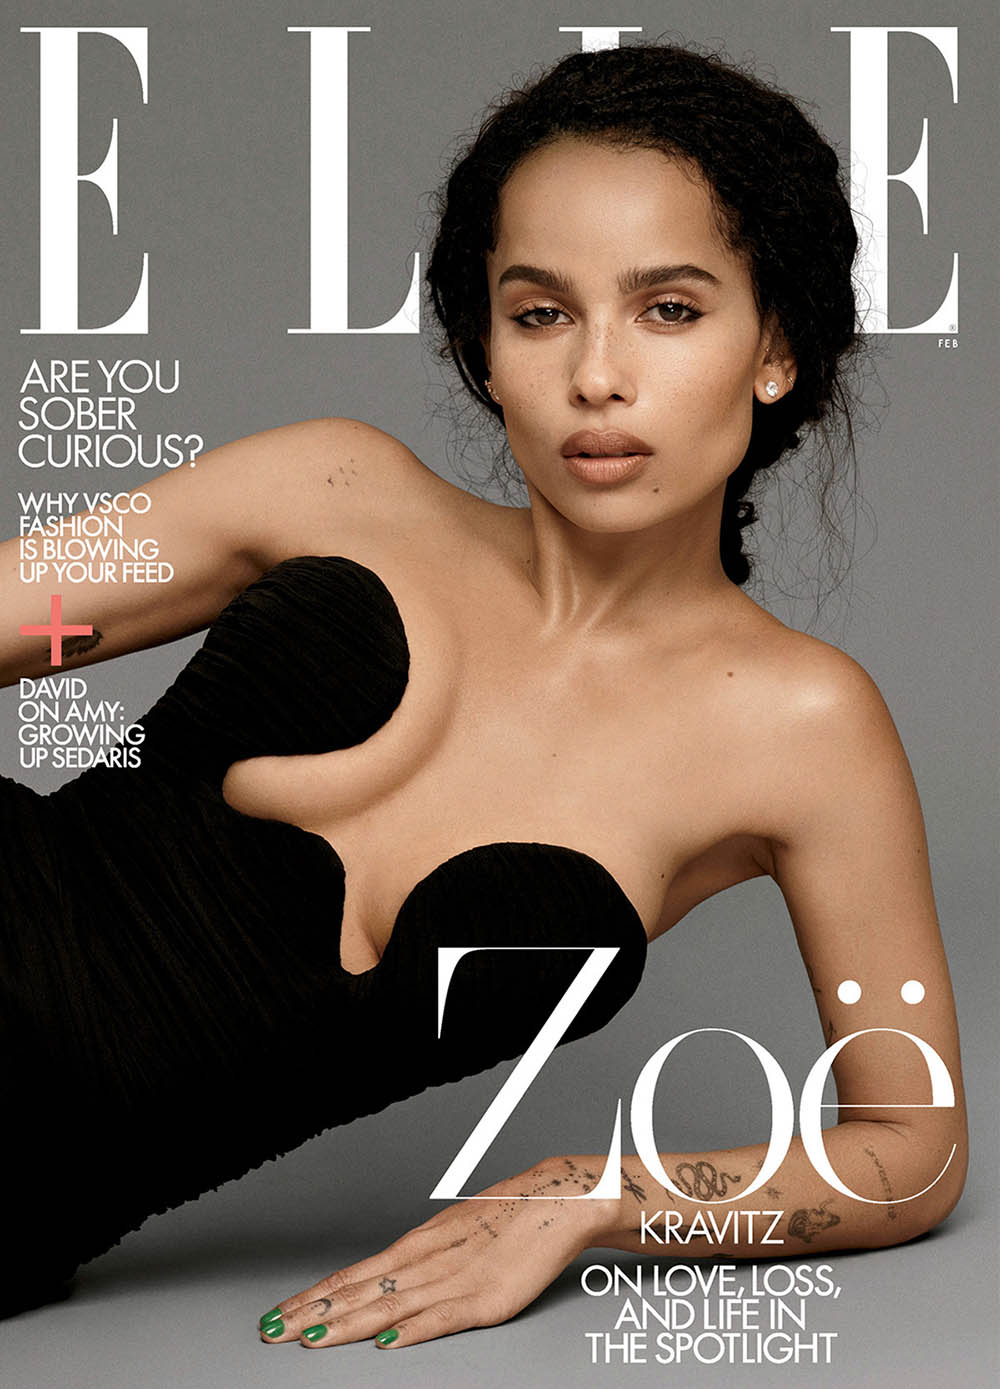 Zoë Kravitz covers Elle US February 2020 by Paola Kudacki